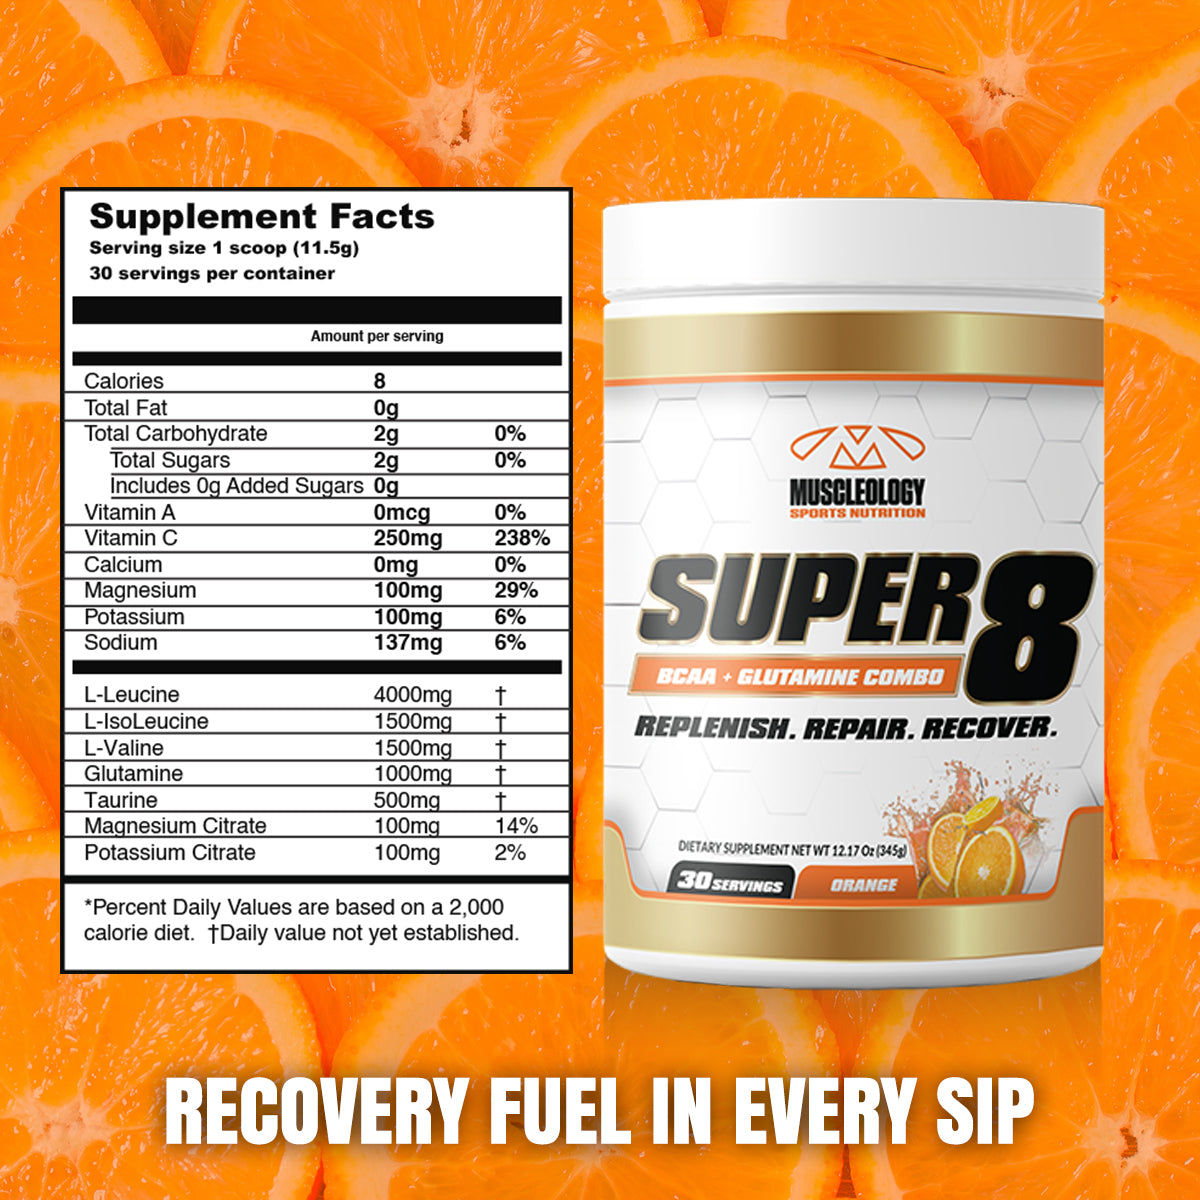 Super 8™ - High Performance BCAA, Electrolyte & Glutamine Formula